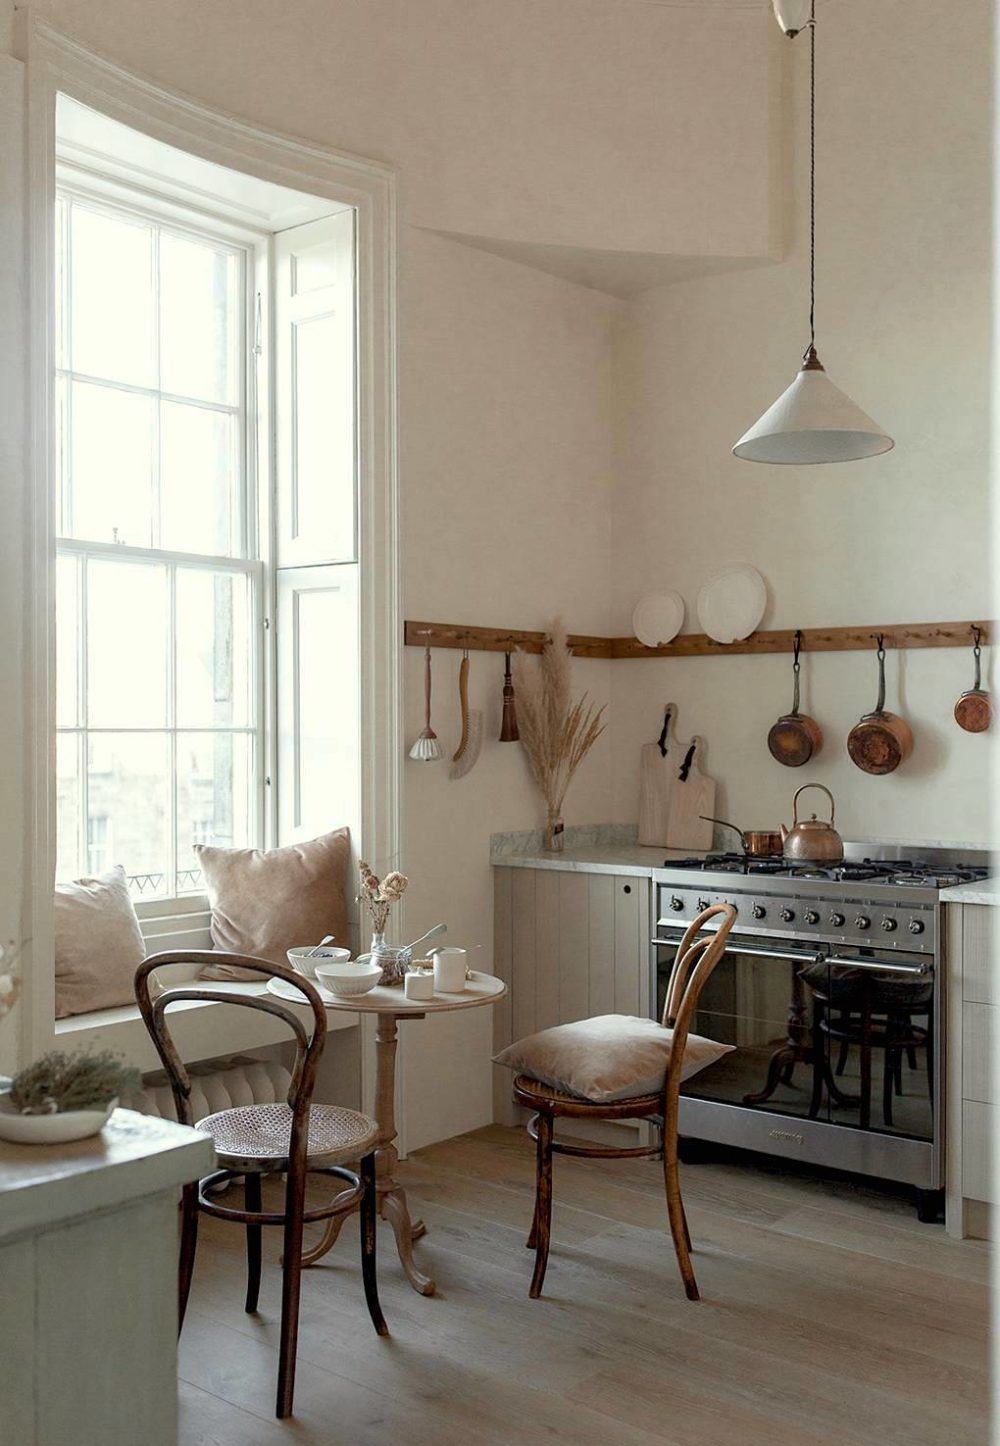 via House & Garden - DeVOL kitchen - radiator - embrasured window